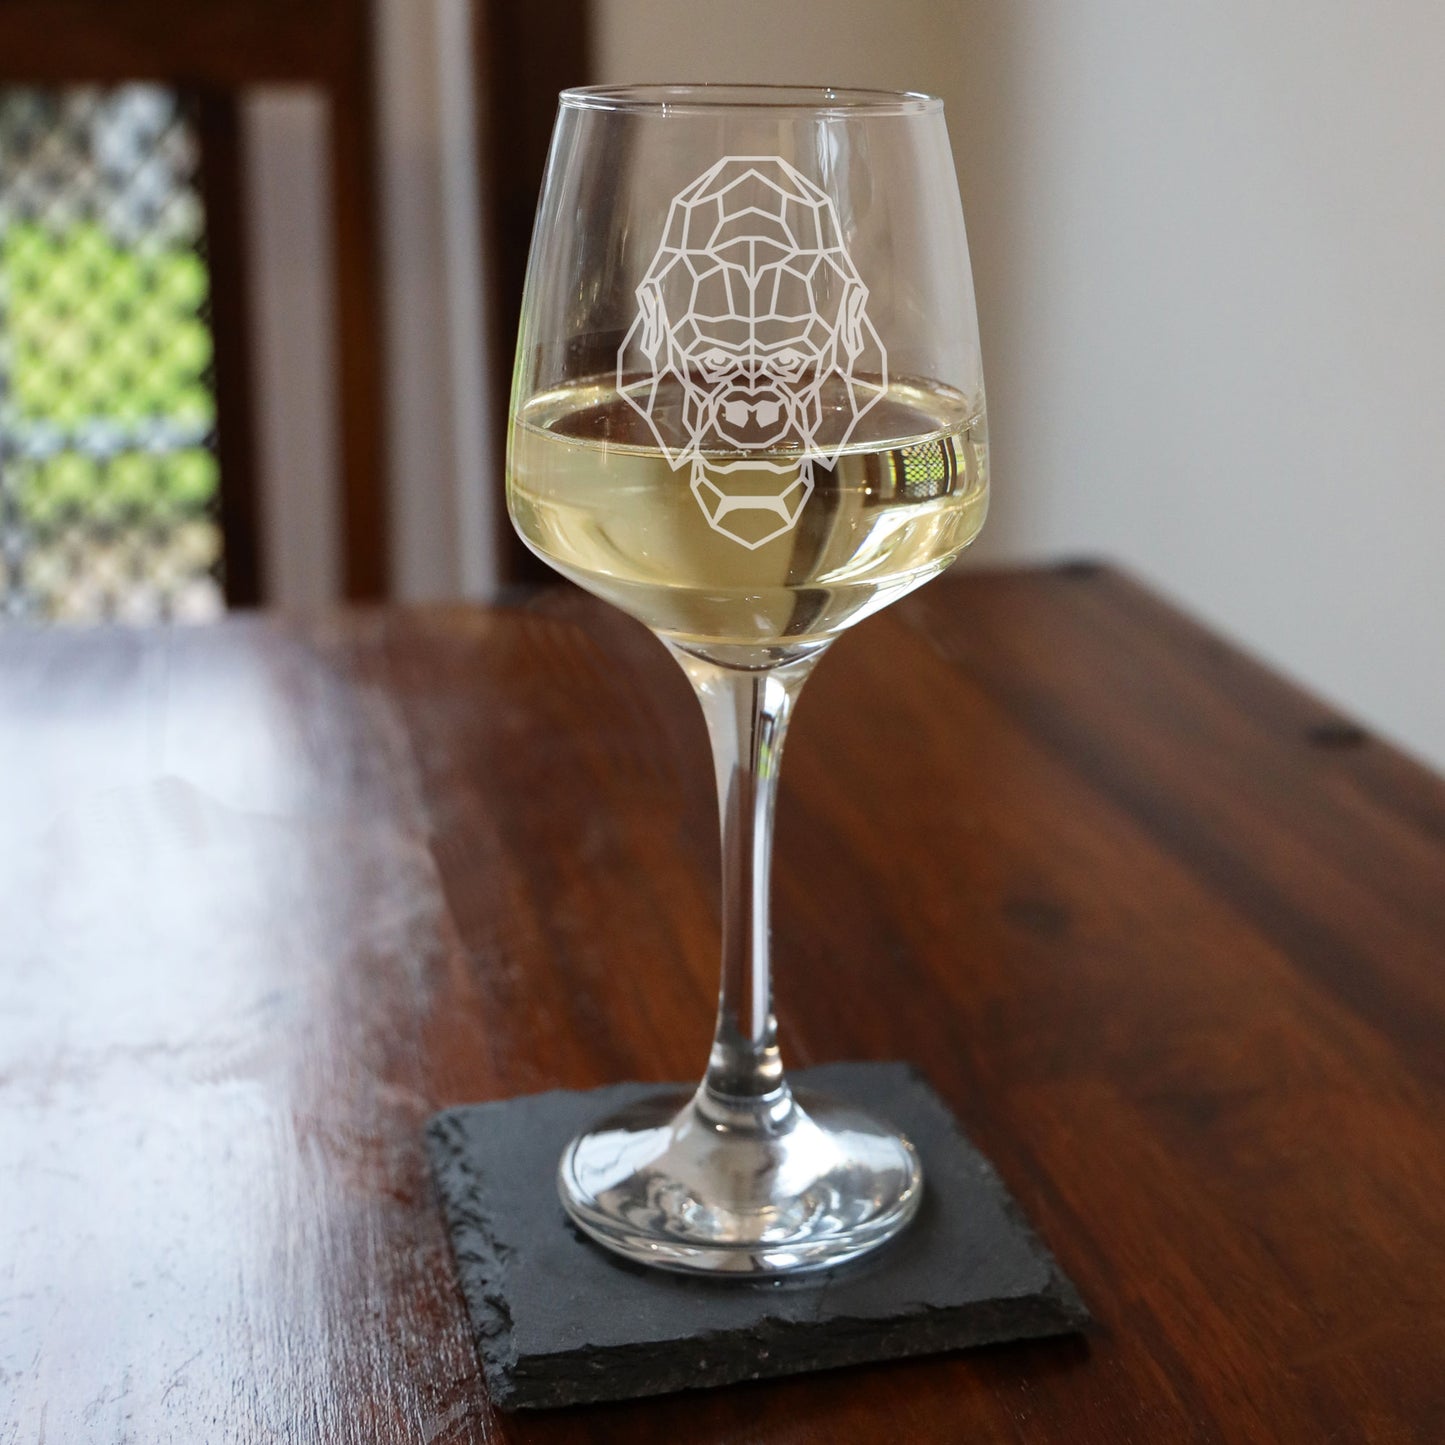 Gorilla Engraved Wine Glass  - Always Looking Good -   